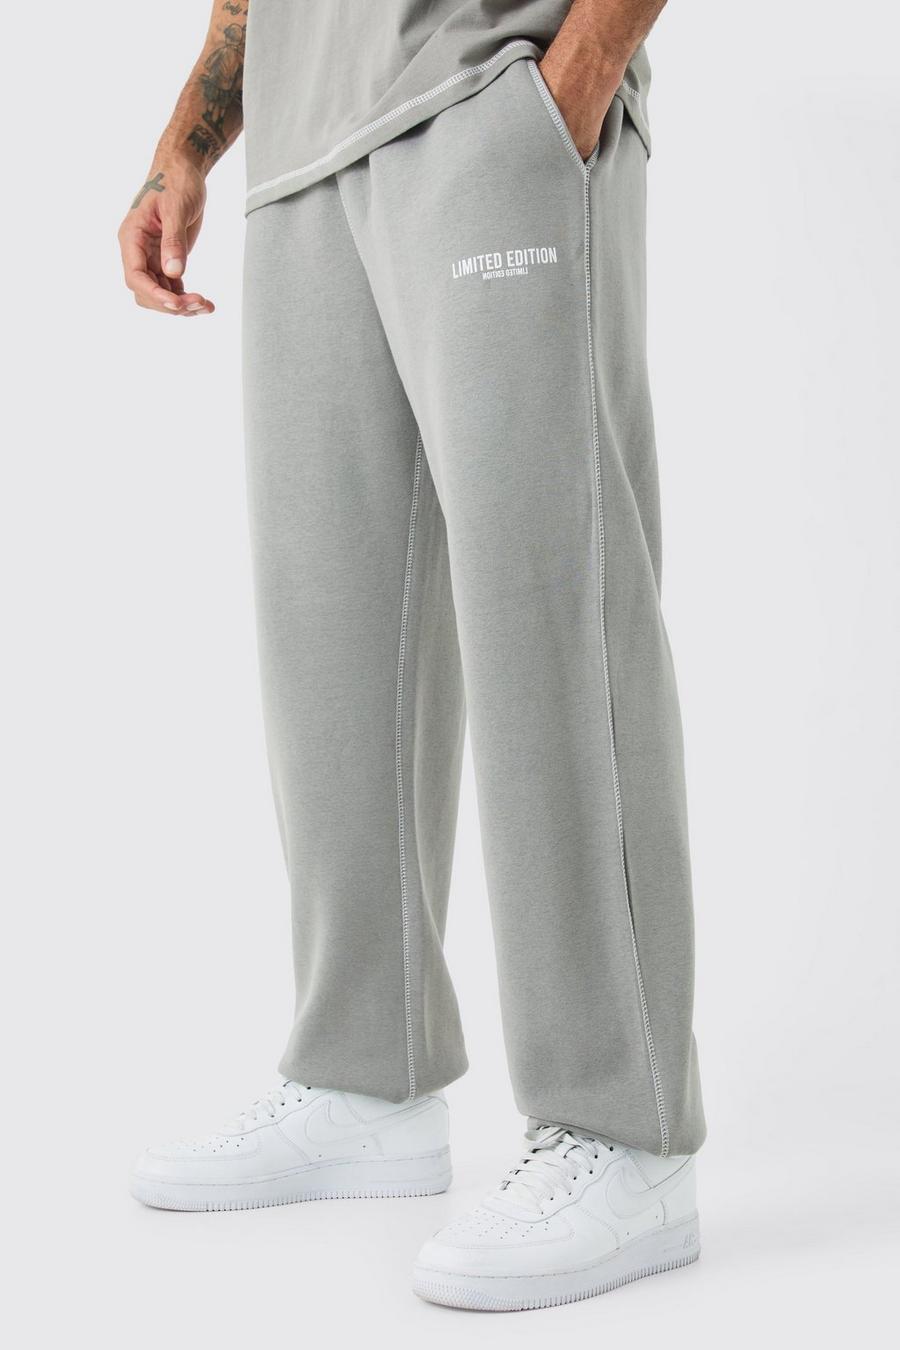 Pantalón deportivo oversize Limited Edition con costuras en contraste, Charcoal image number 1